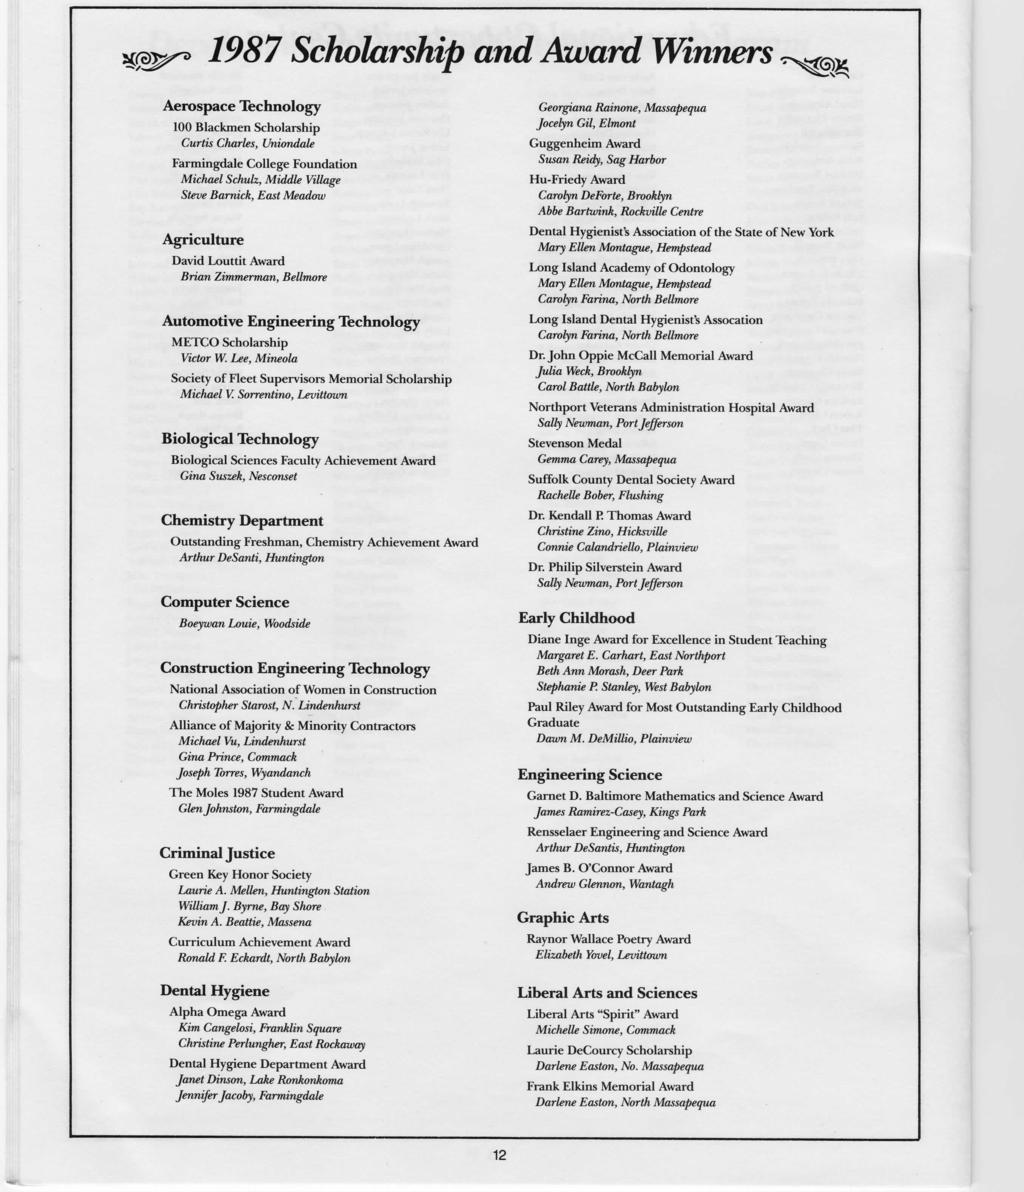 1987 Scholarship and Award Winners Aerospace Technology 100 Blackmen Scholarship Curtis Charles, Uniondale Farmingdale College Foundation Michael Schulz, Middle Village Steve Barnick, East Meadow